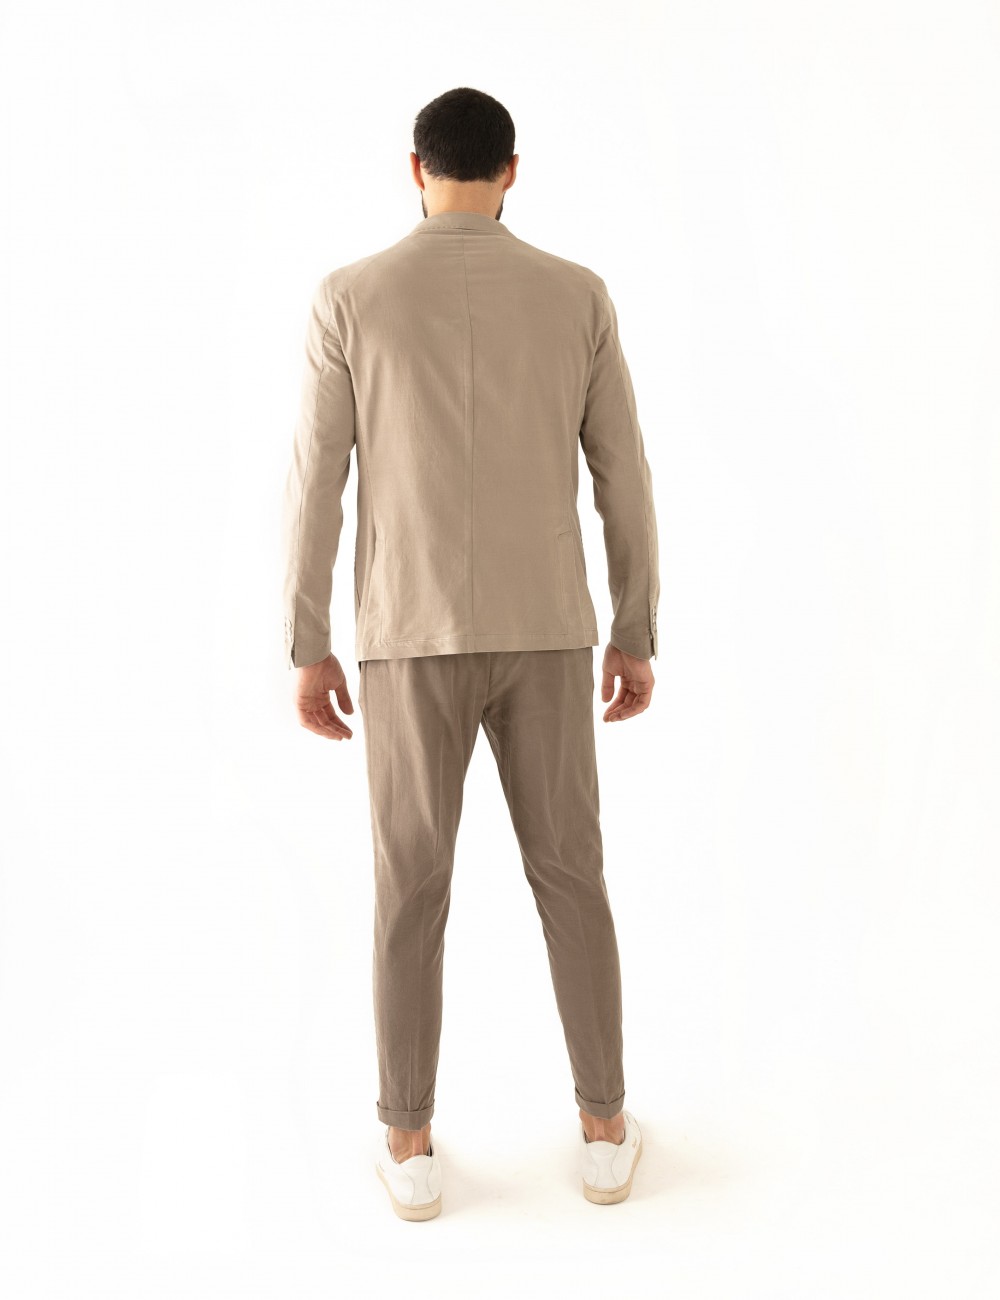 Giacca monopetto beige VAB mod.  "Nisida" in cotone ultra-light indossata retro